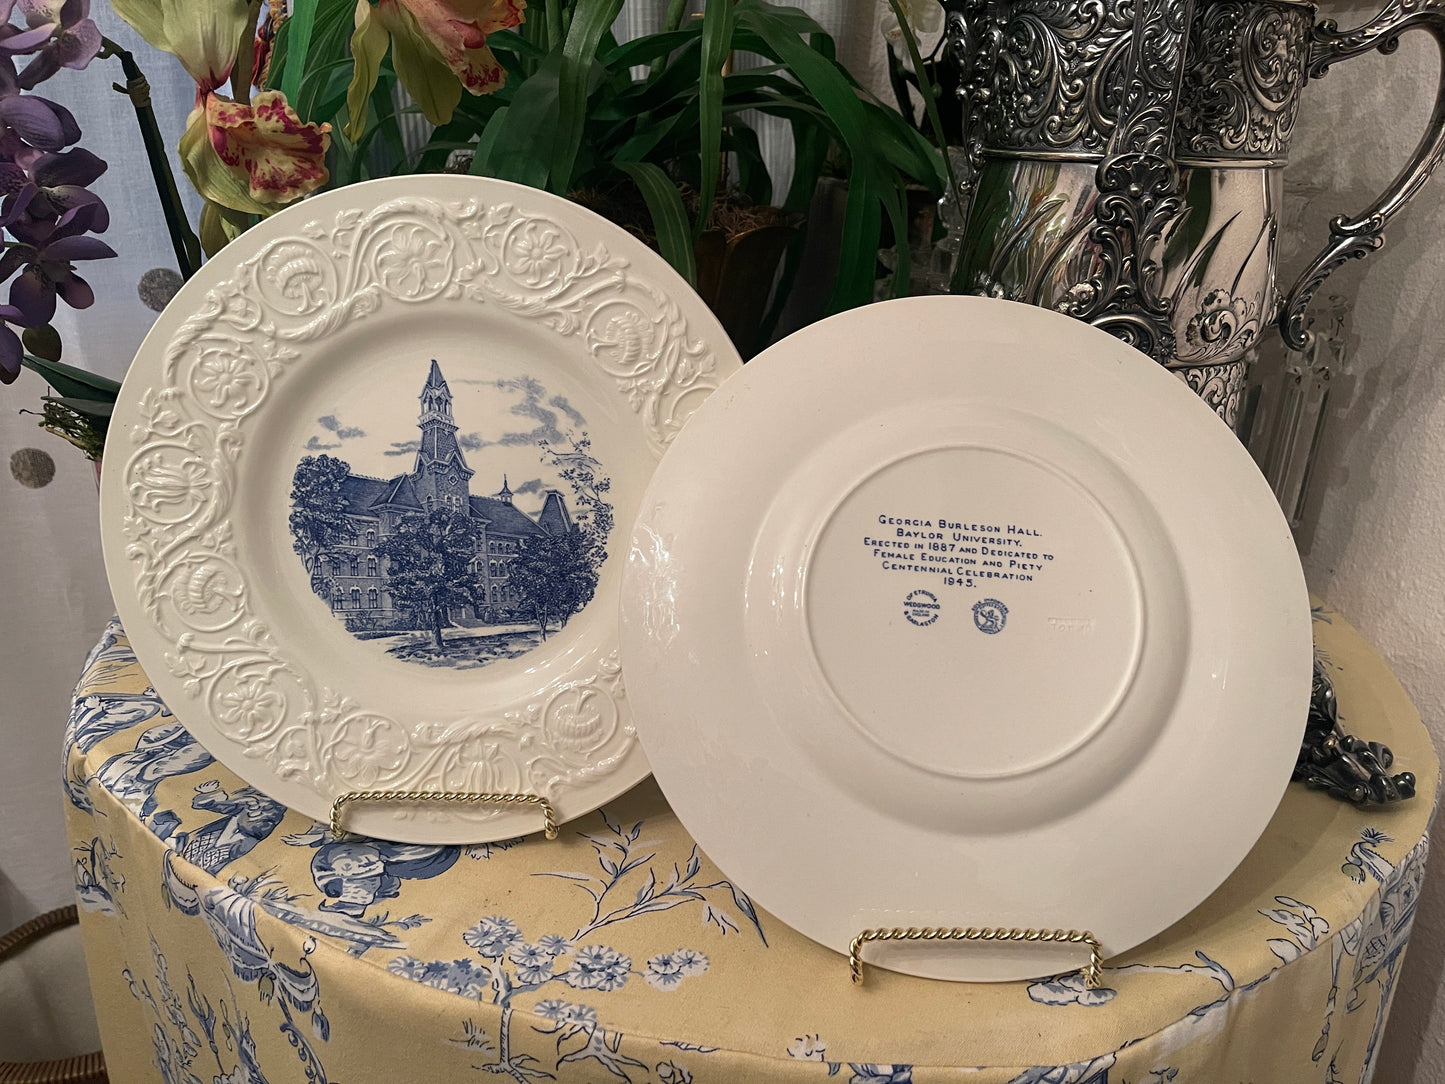 Georgia Burleson Hall Baylor University Blue and White Wedgwood Commemorative Plate